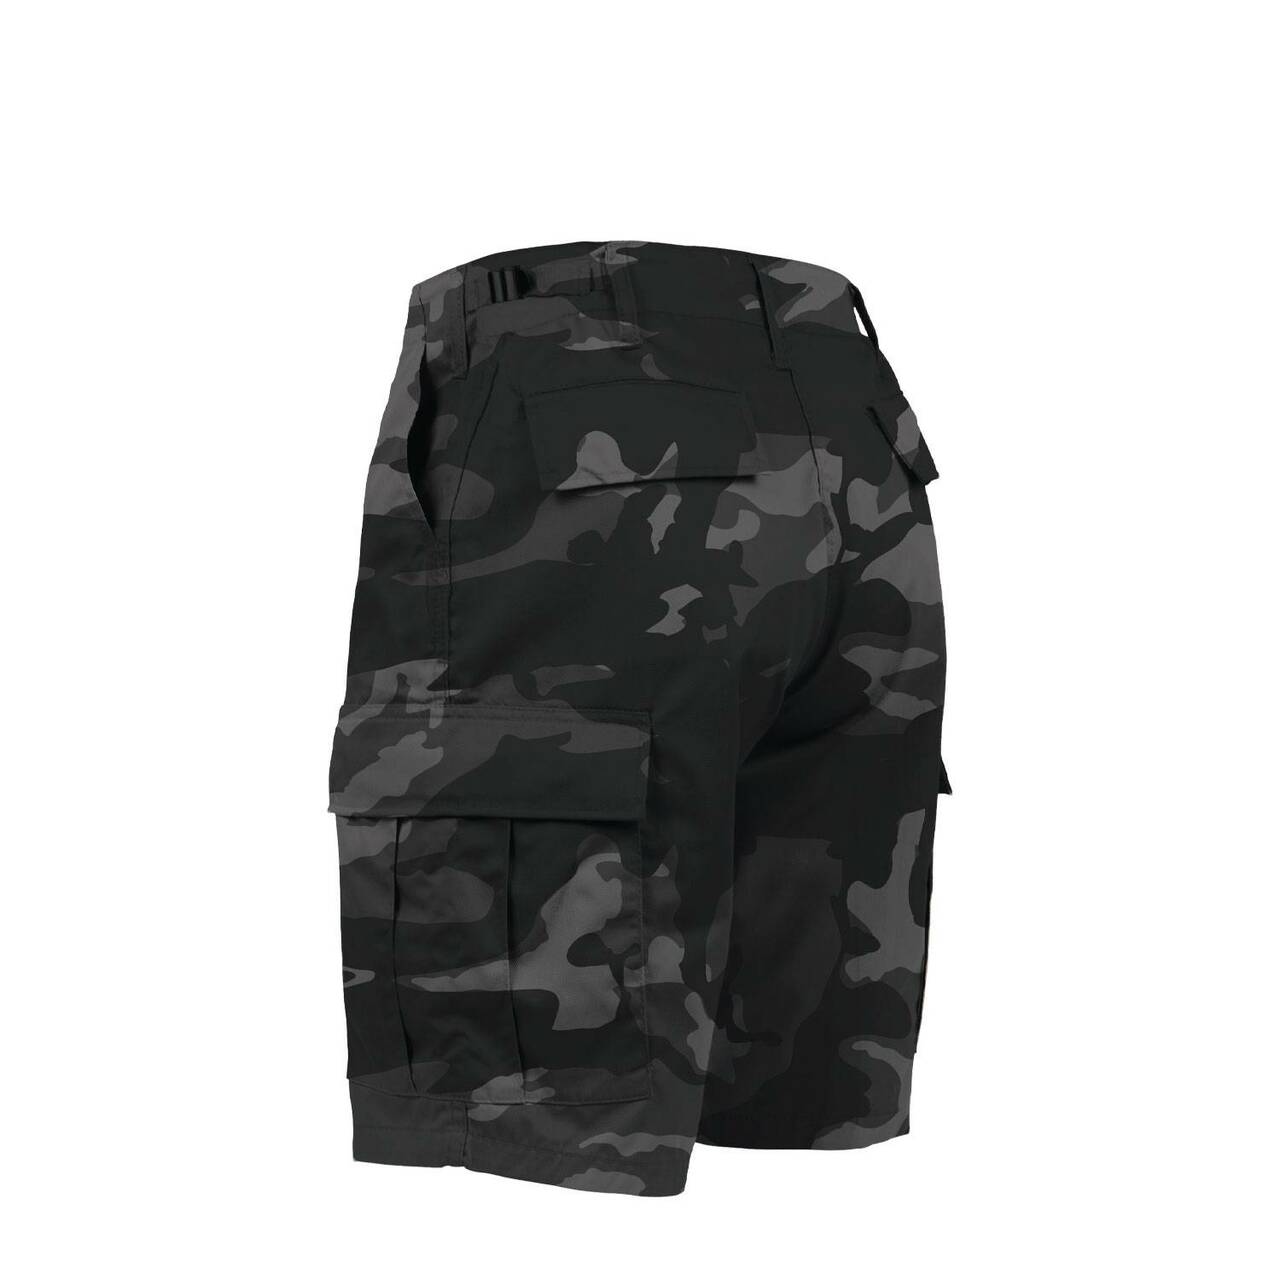 Colored Camo BDU Cargo Shorts – Black Camo | Rothco